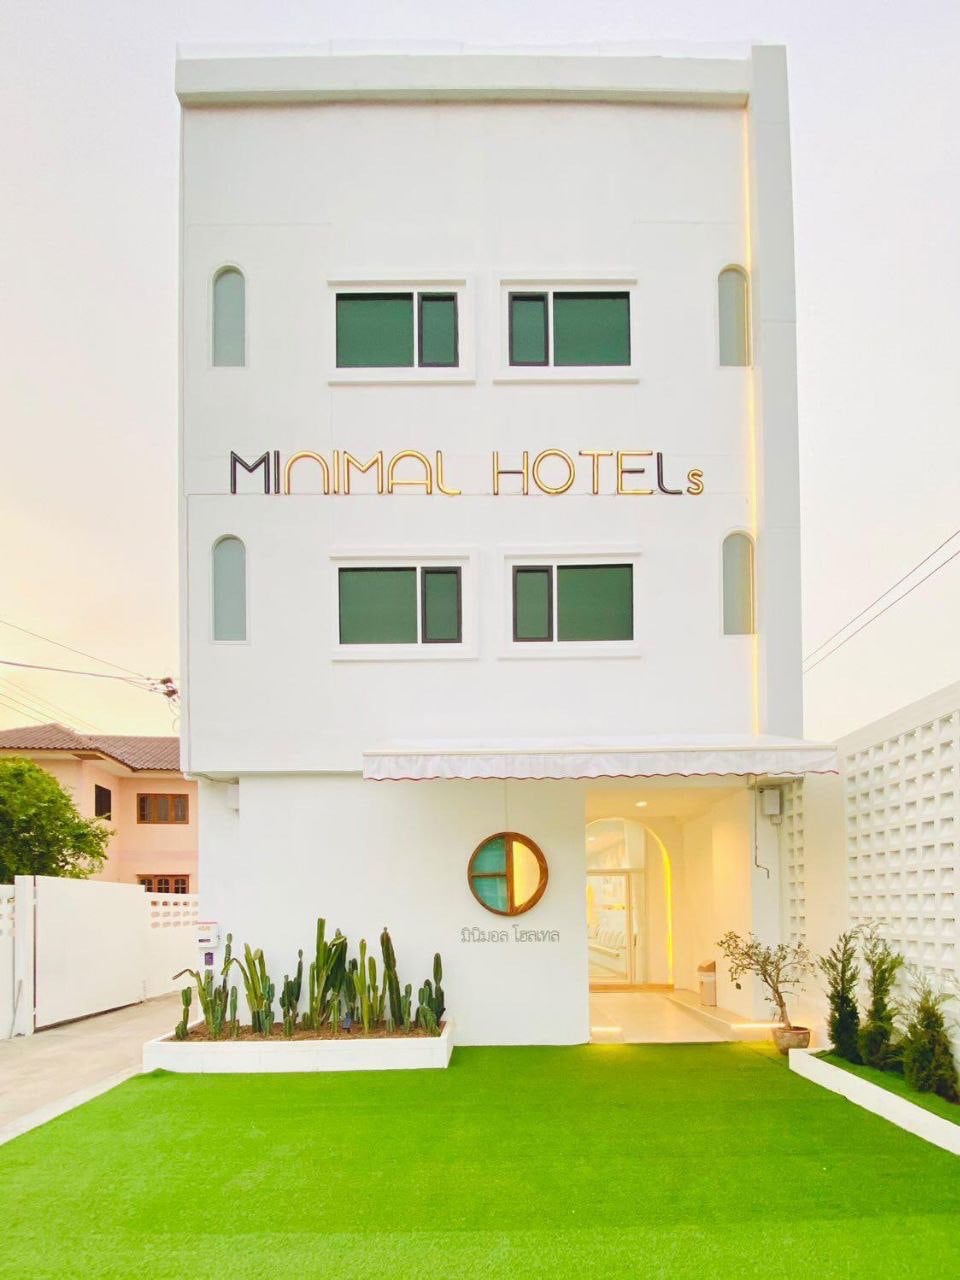 Minimal hotels